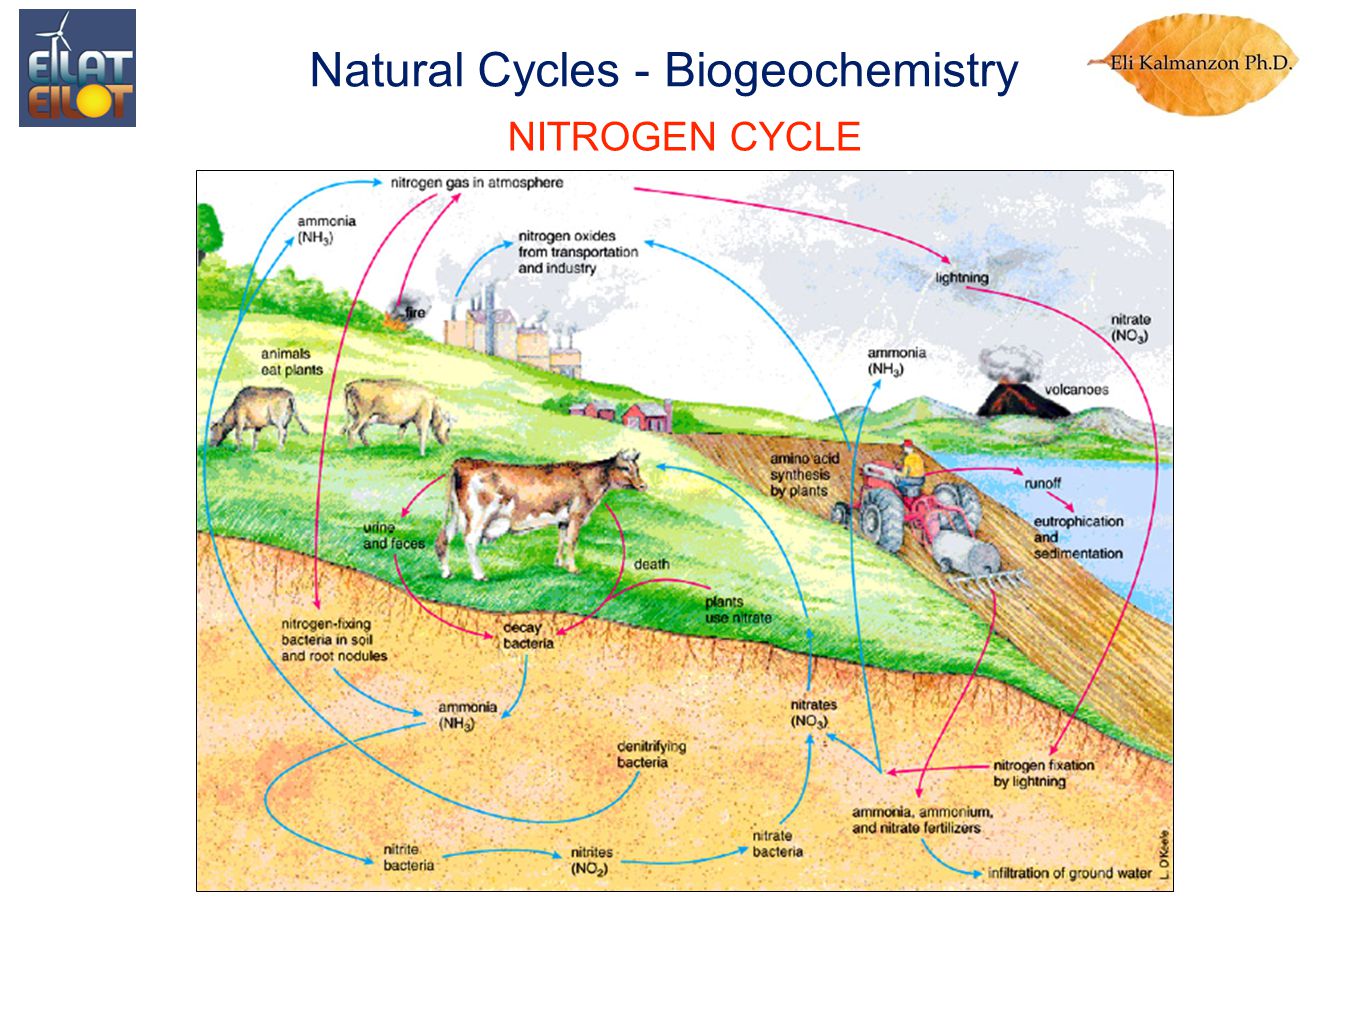 NITROGEN CYCLE Natural Cycles - Biogeochemistry